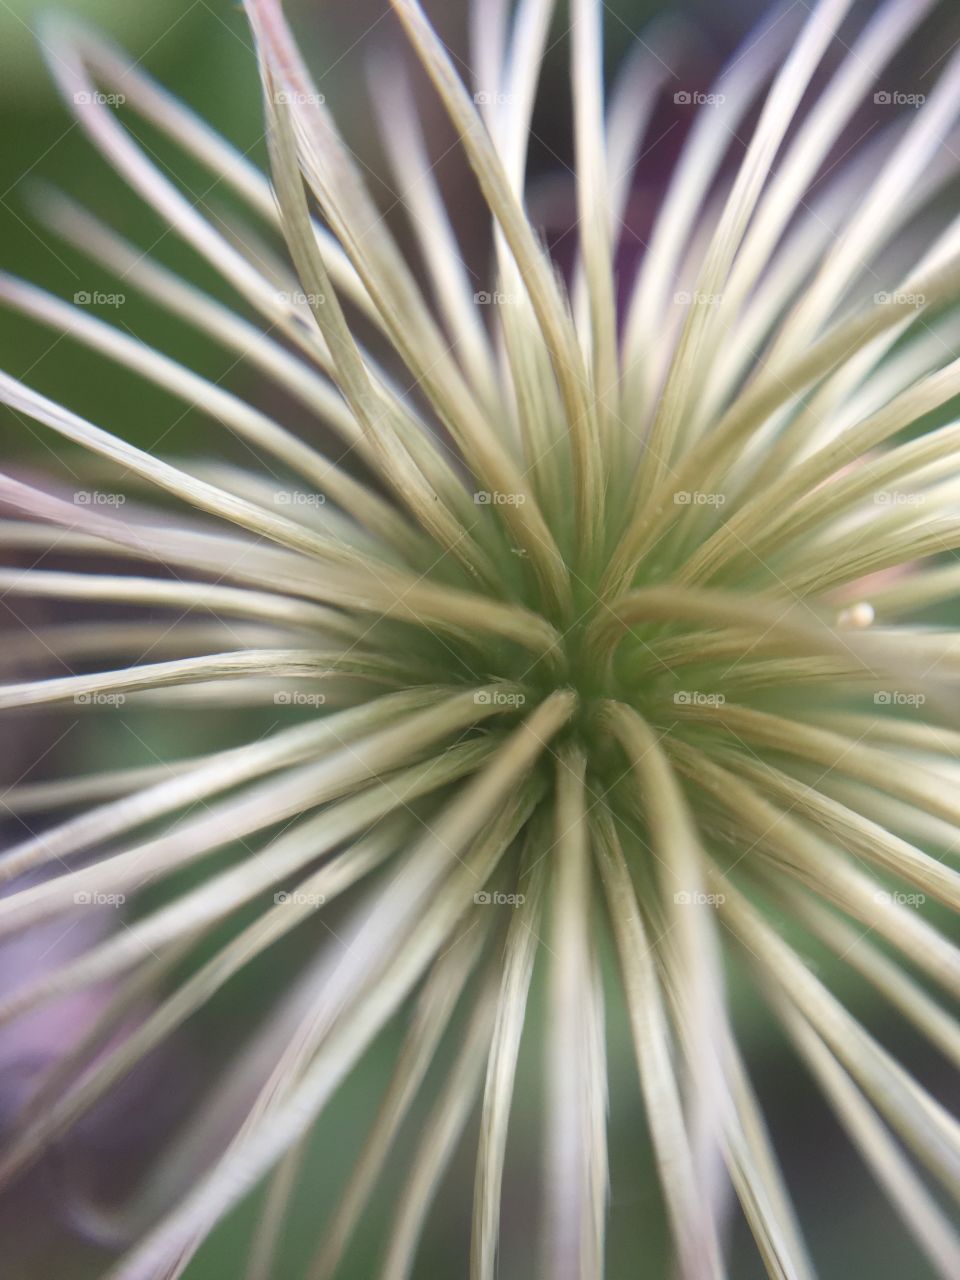 A plant close up 